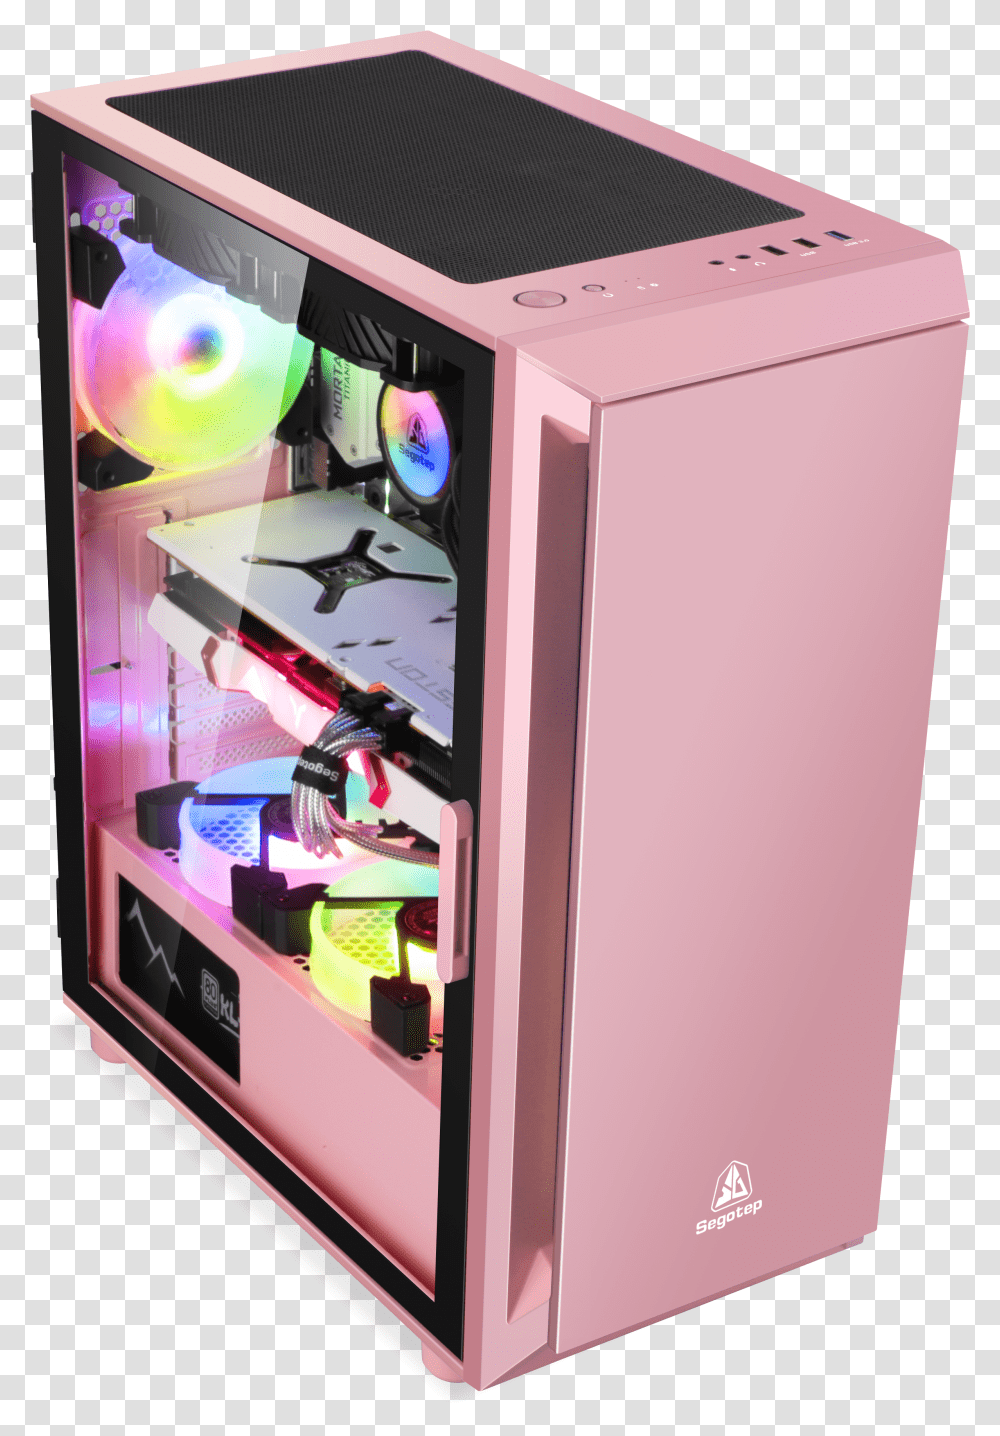 Segotep Gank 5 Gaming Computer Pc Case Pink Pc Case Transparent Png